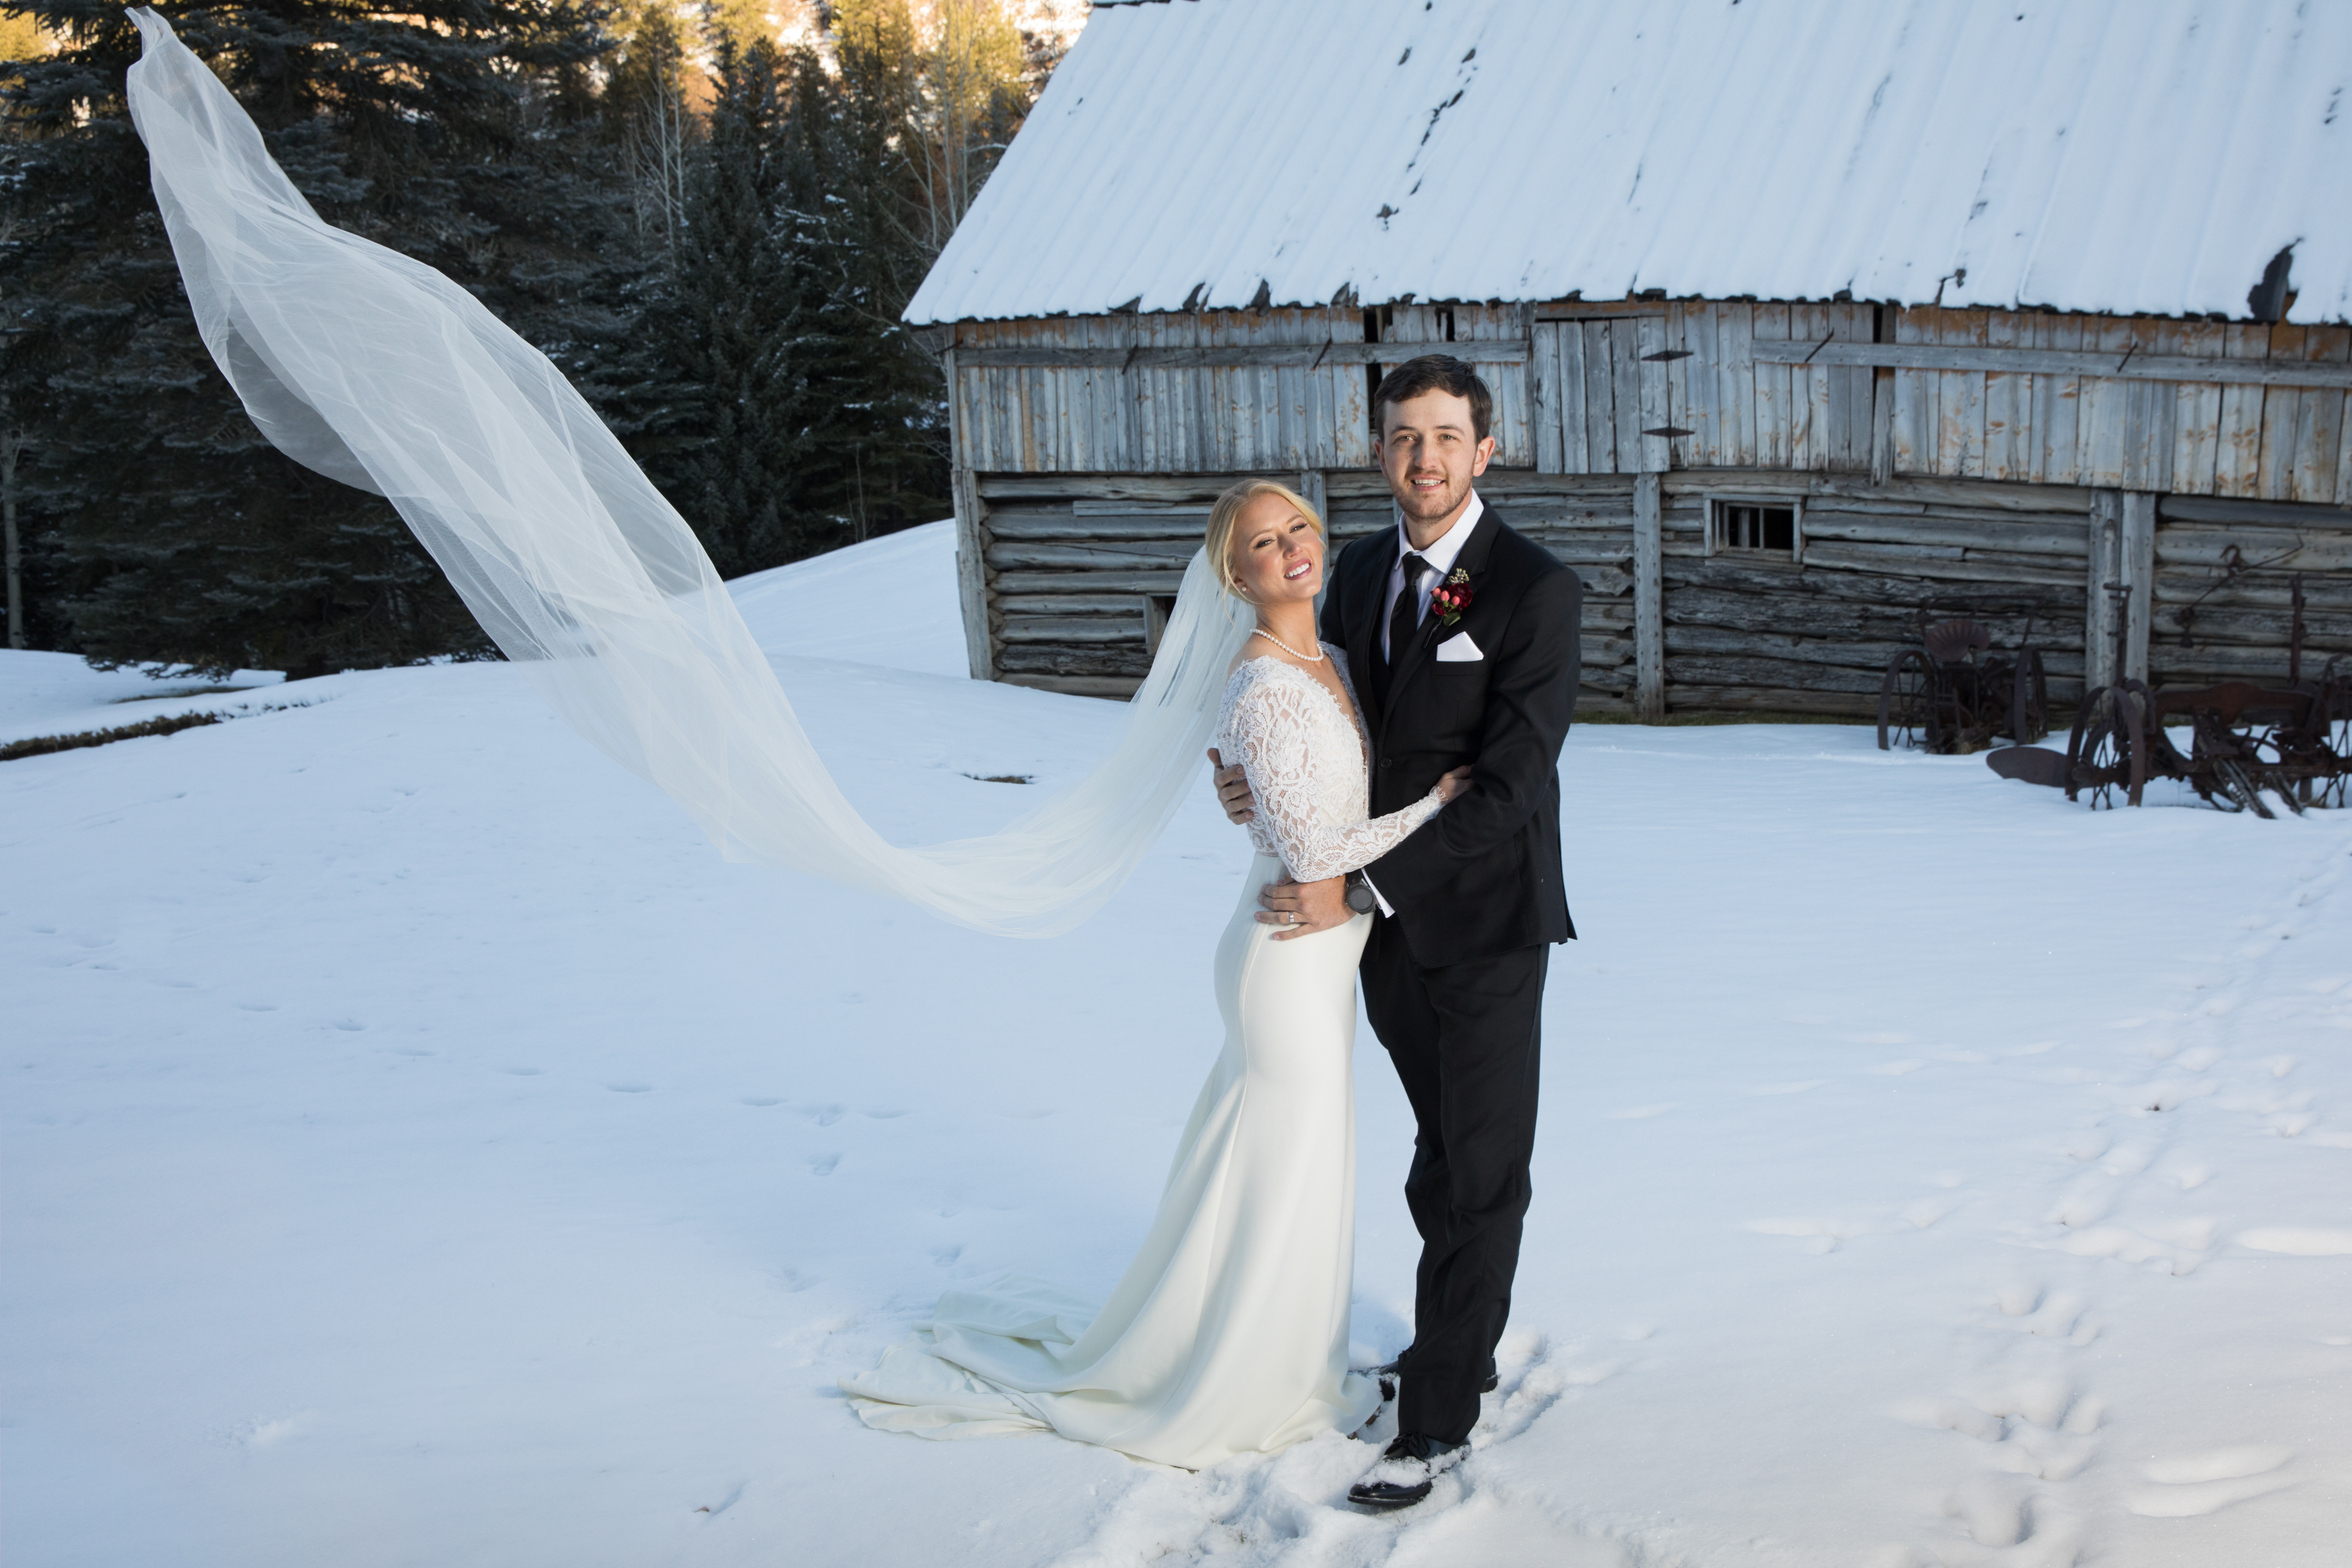 Jaci and Nick Ruhle's wedding in Beaver Creek with photographer Toni Axelrod - Toni Axelrod Studios